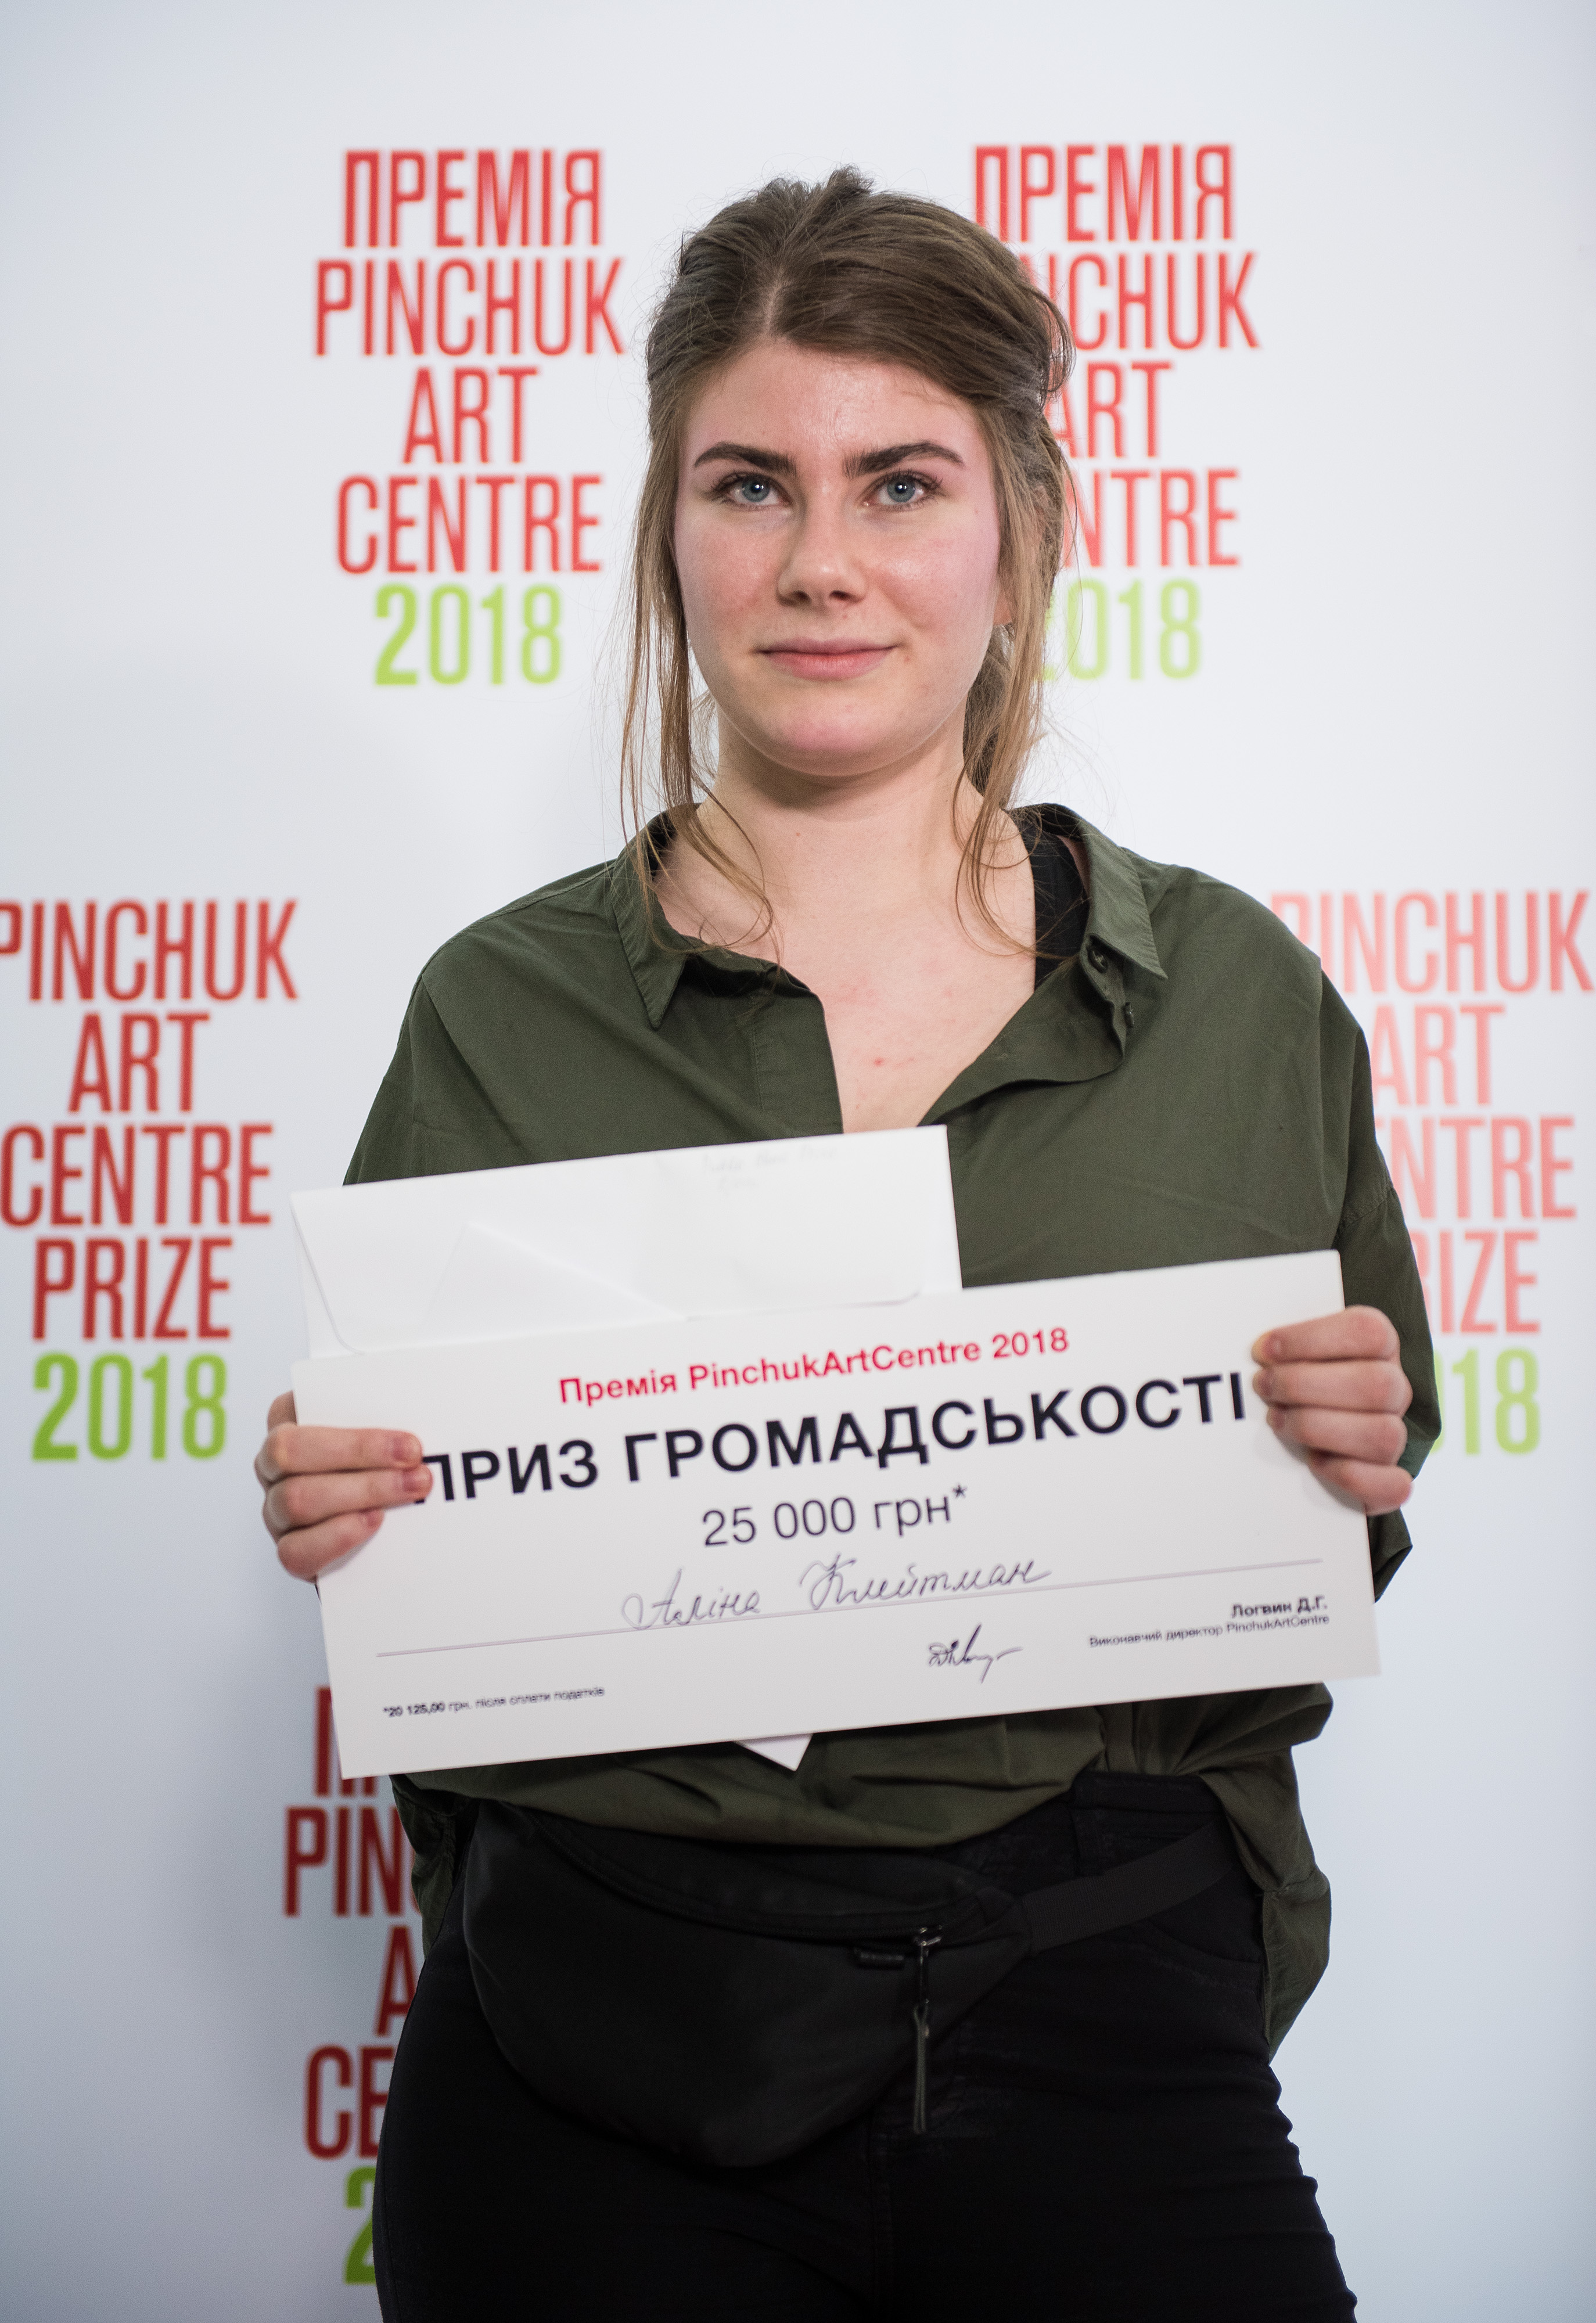 PinchukArtCentre 2018